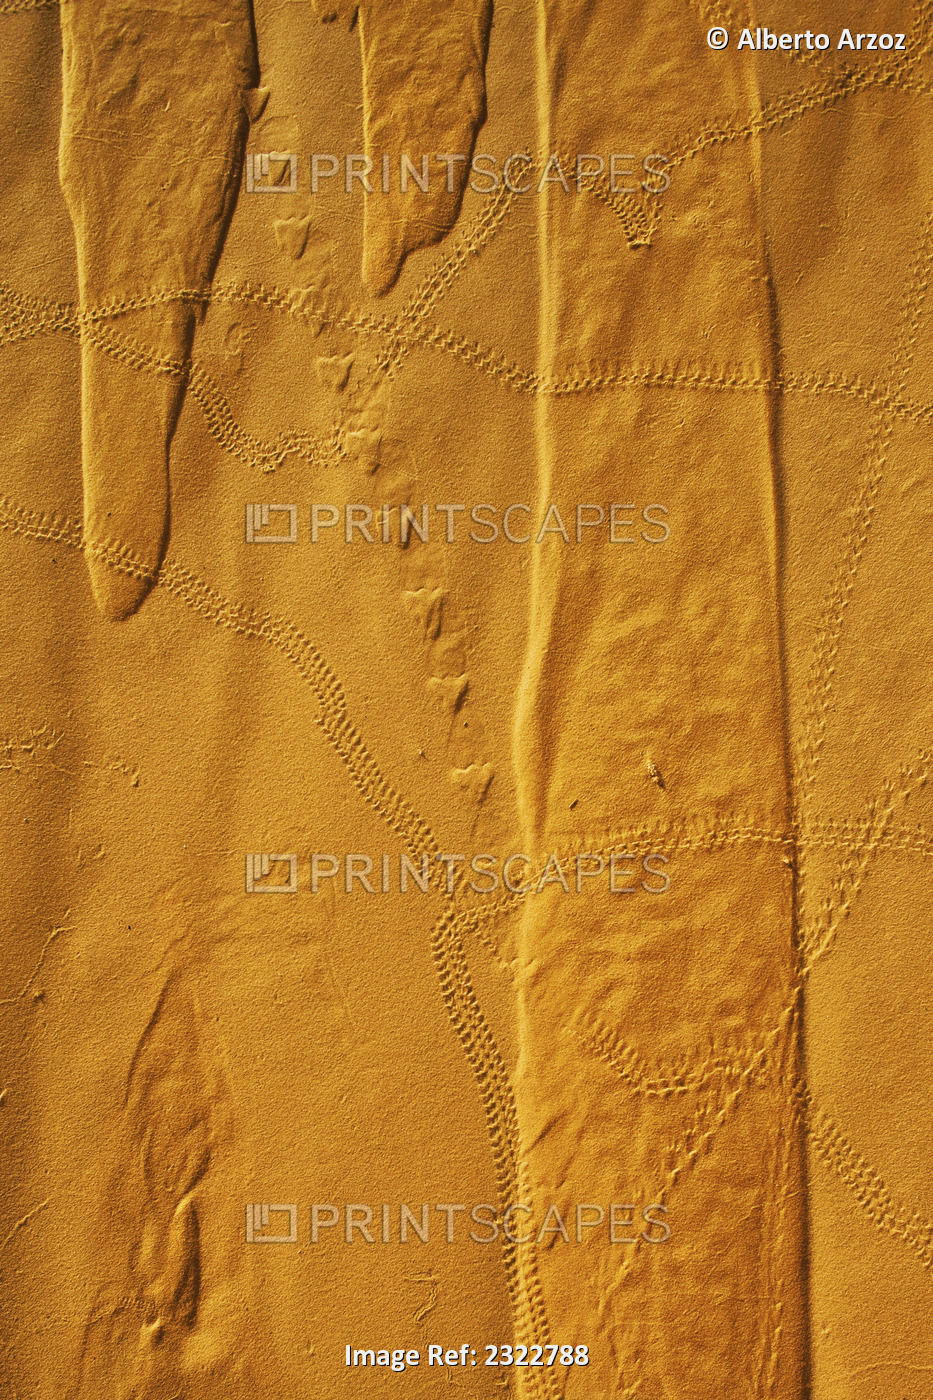 Niger, Sahara Desert; Northern Niger, Patterns and animal tracks on sand